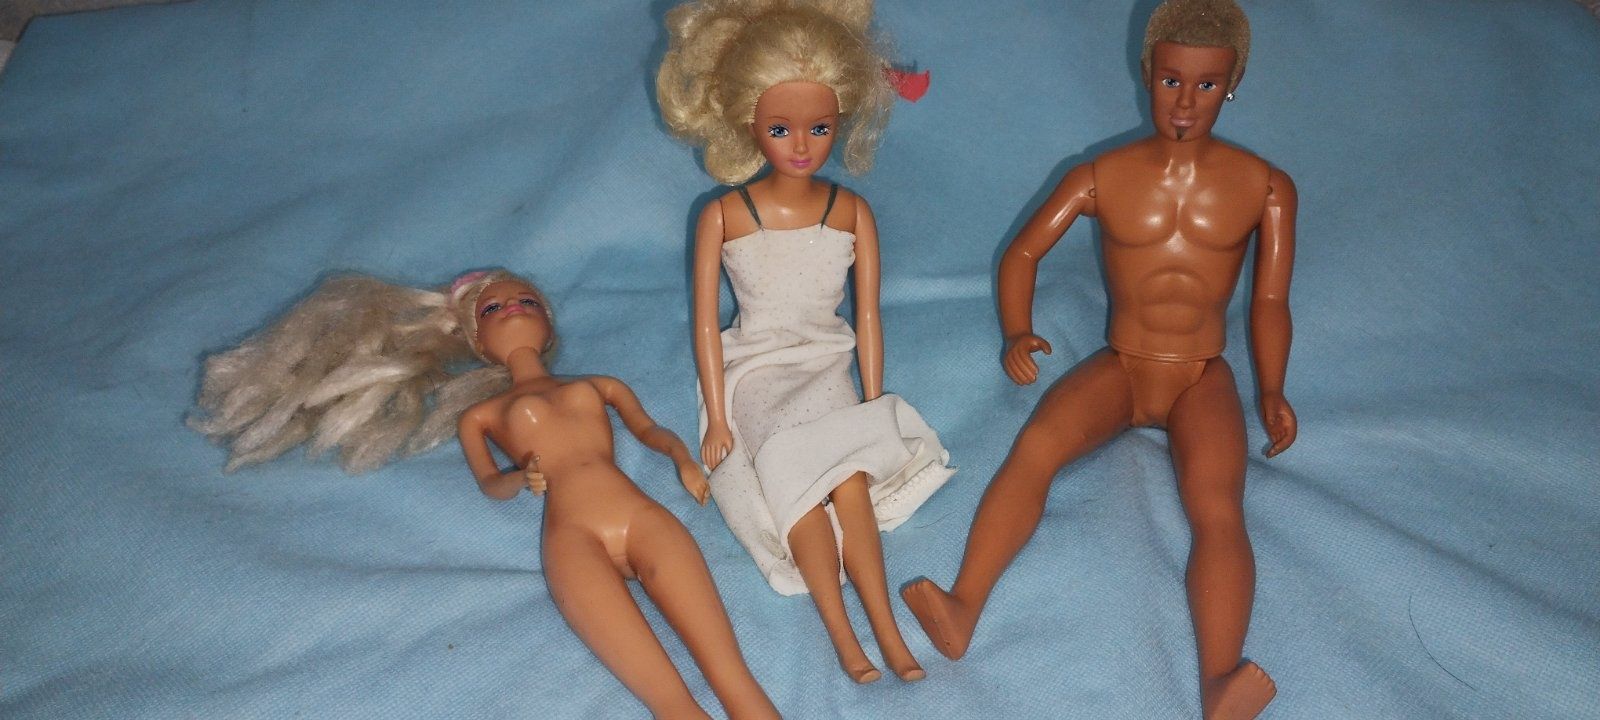 2 ляльки Барбі і Кен